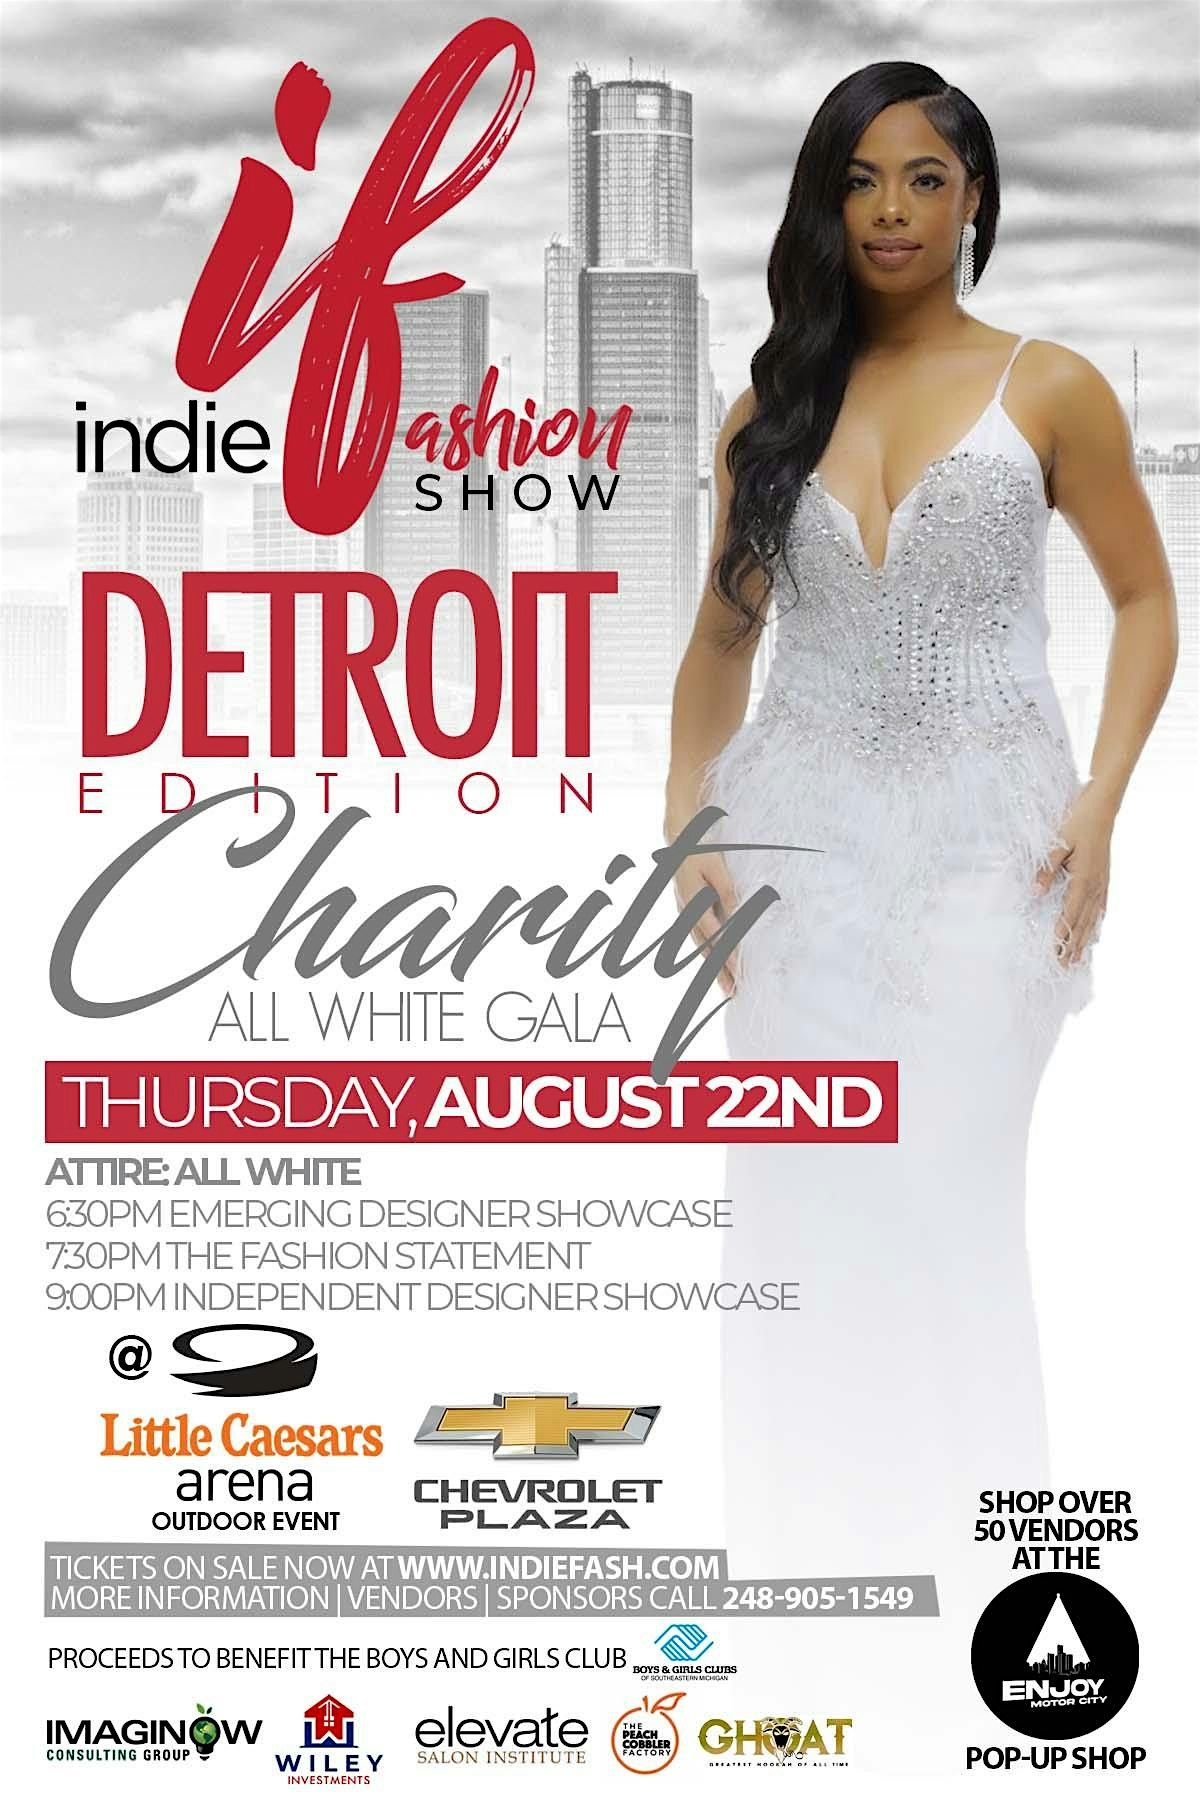 Indie Fashion Show Detroit | Annual Charity All White Gala @ Little Caesars